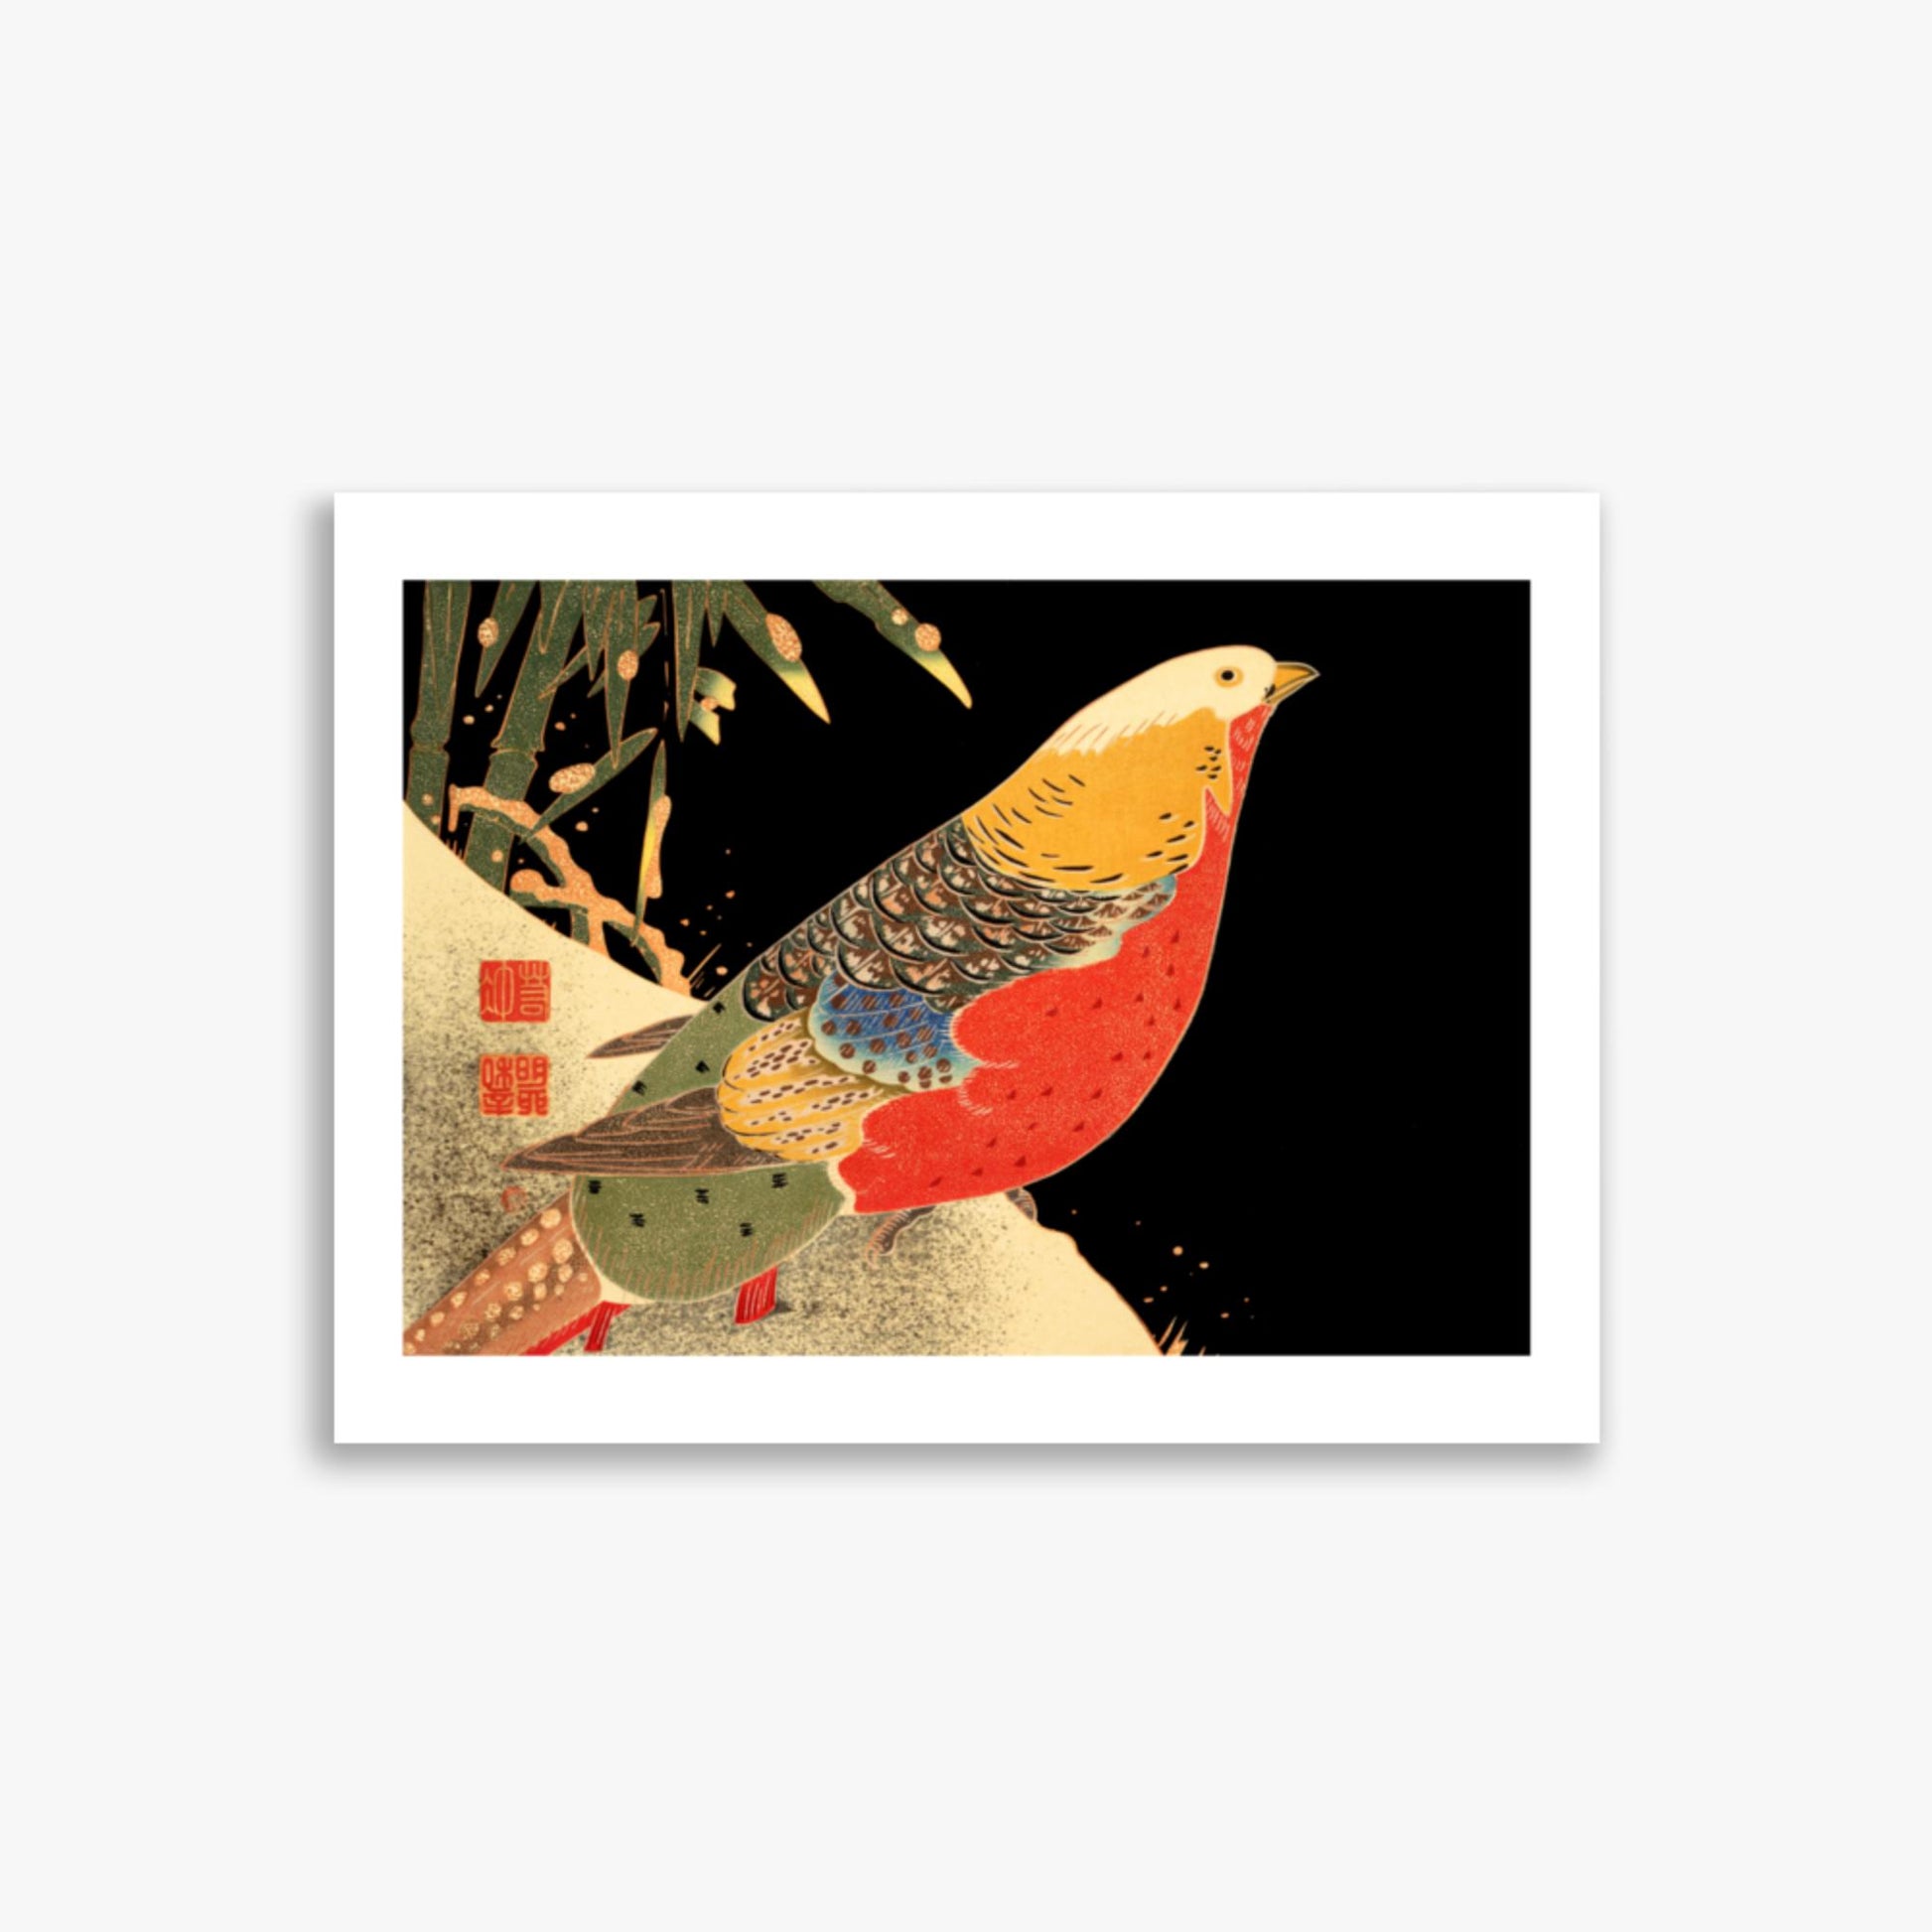 Ito Jakuchu - Golden Pheasant in the Snow 30x40 cm Poster